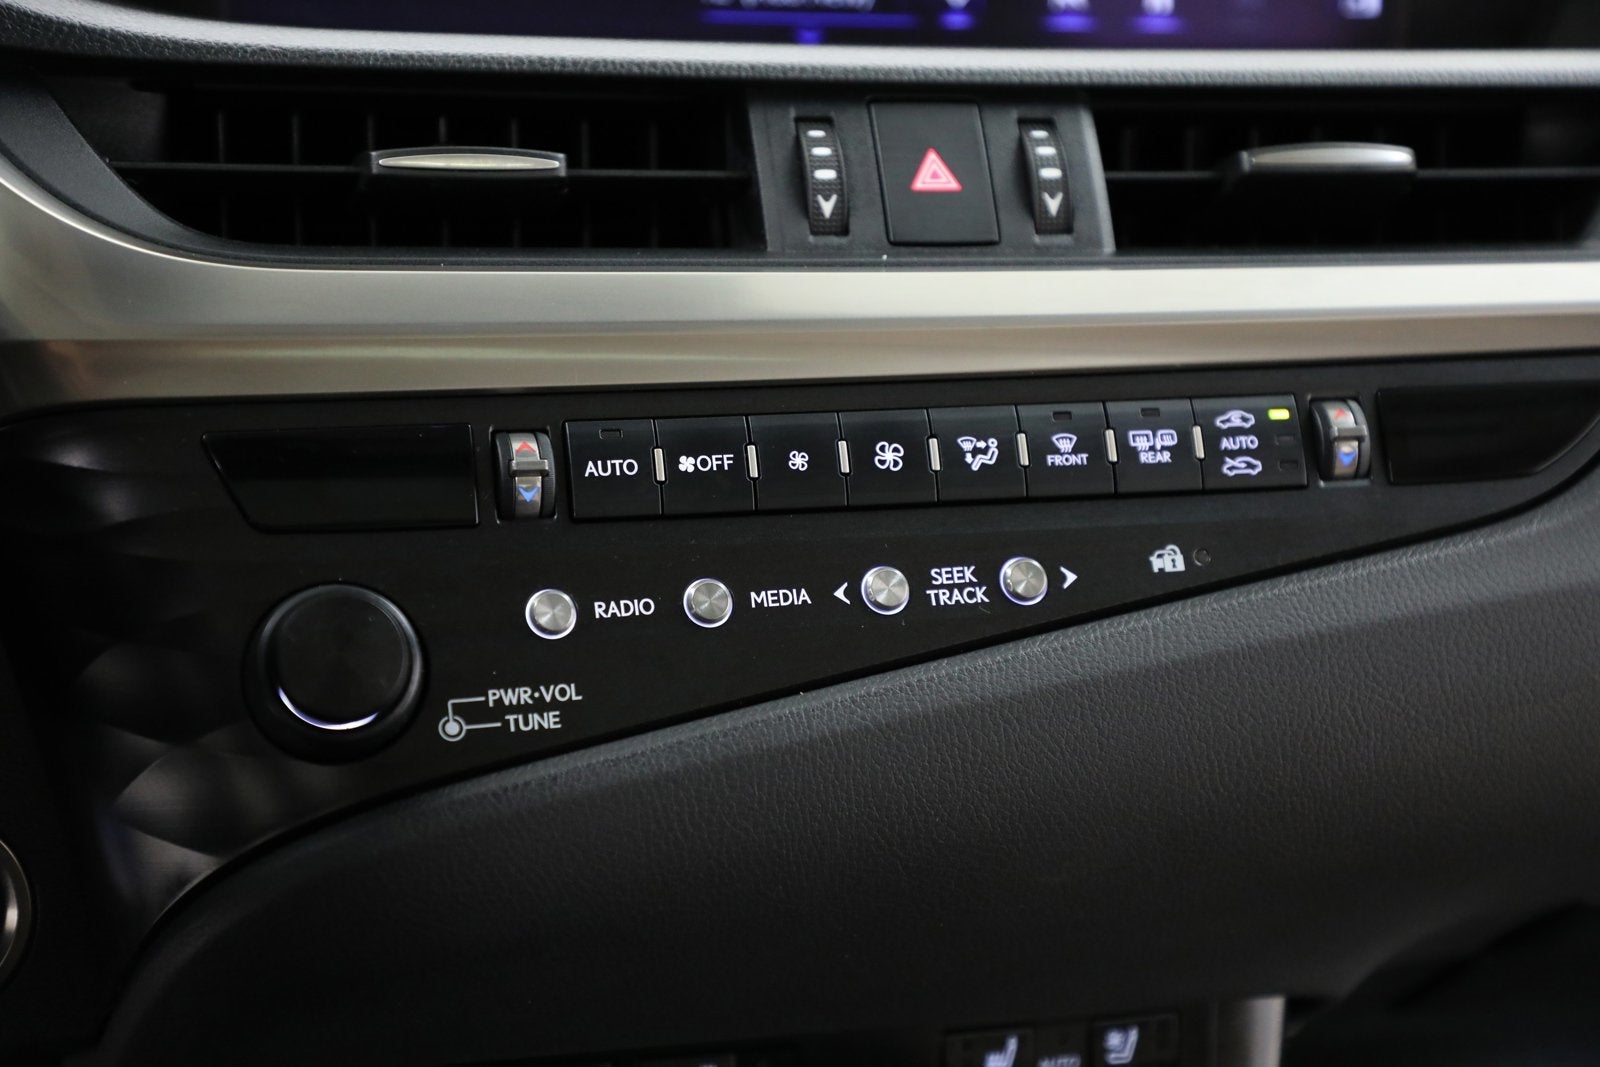 2019 Lexus ES ES 350 Premium Sunroof Navigation Heated Cooled Leather Memory Homelink 1 Owner Clean Carfax